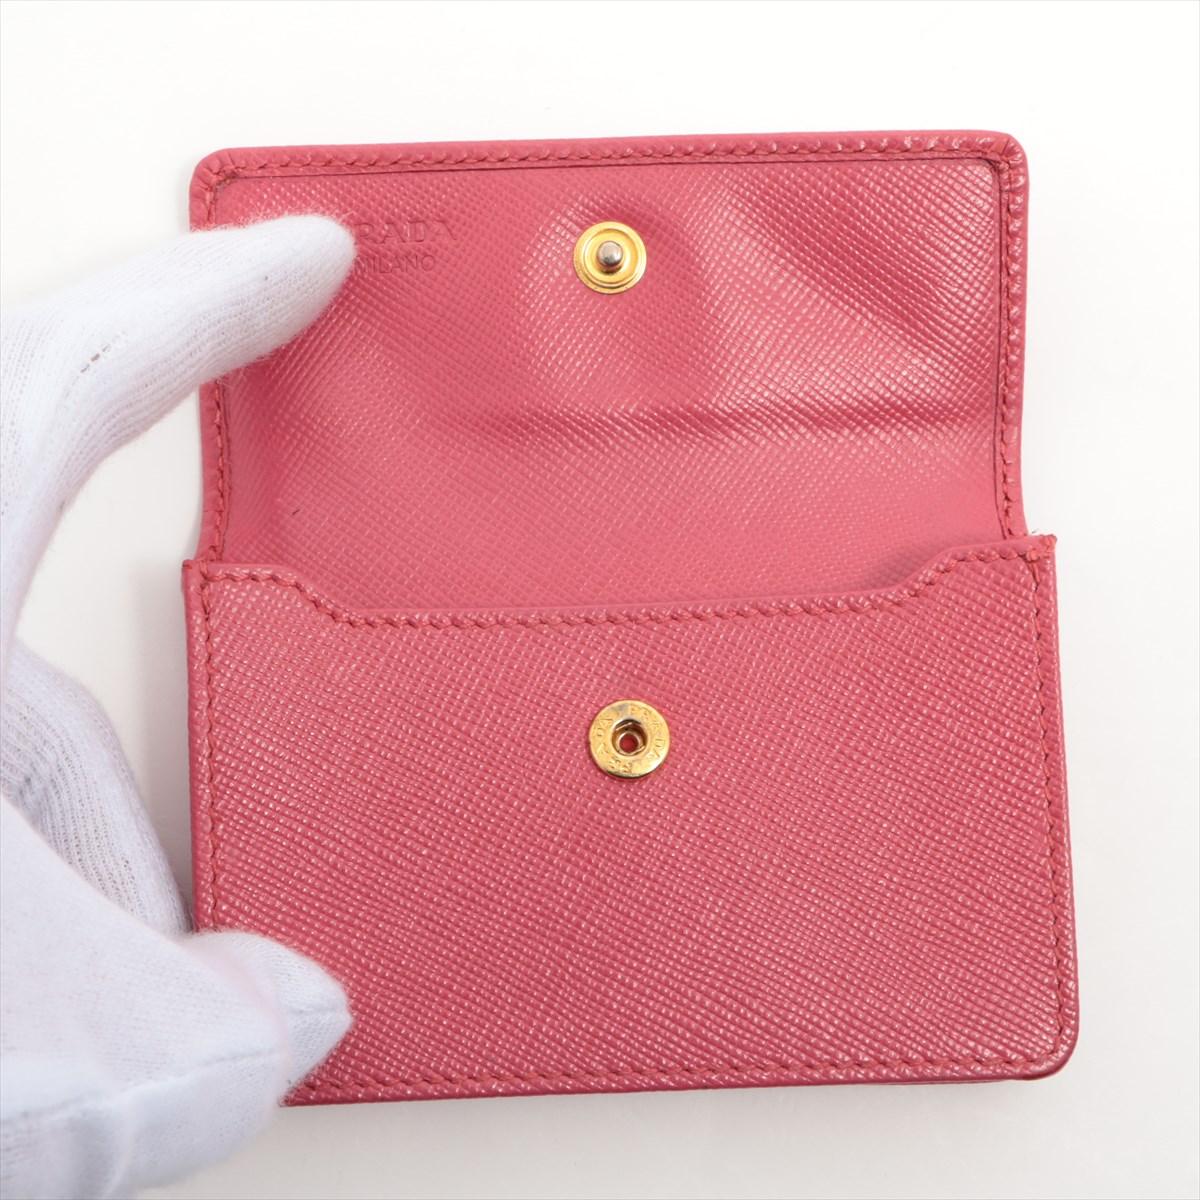 Women's Prada Saffiano Leather Card Case Pink